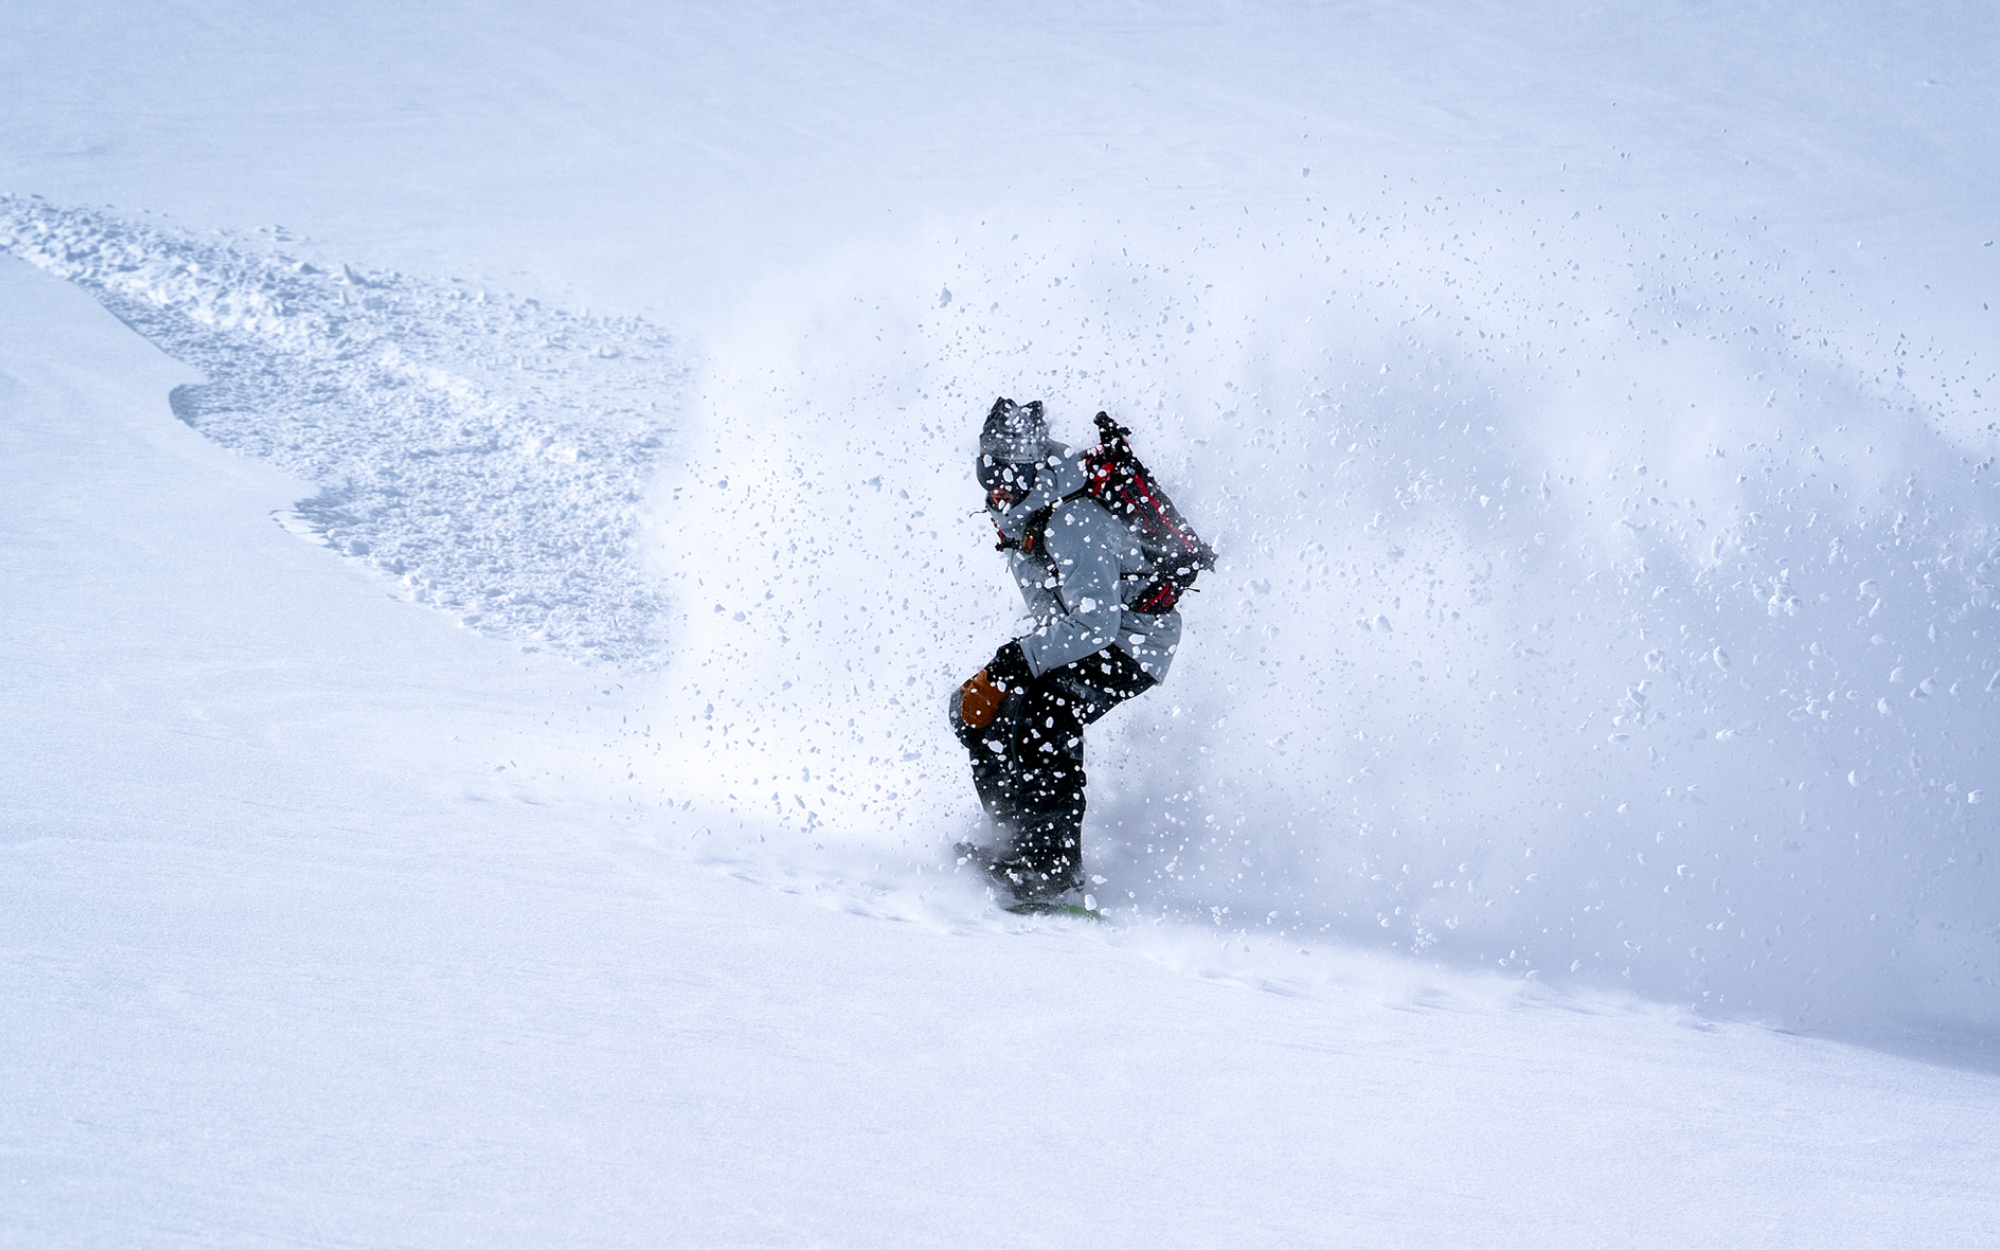 Bruce Johnston snowboarding in prime snow globe conditions.